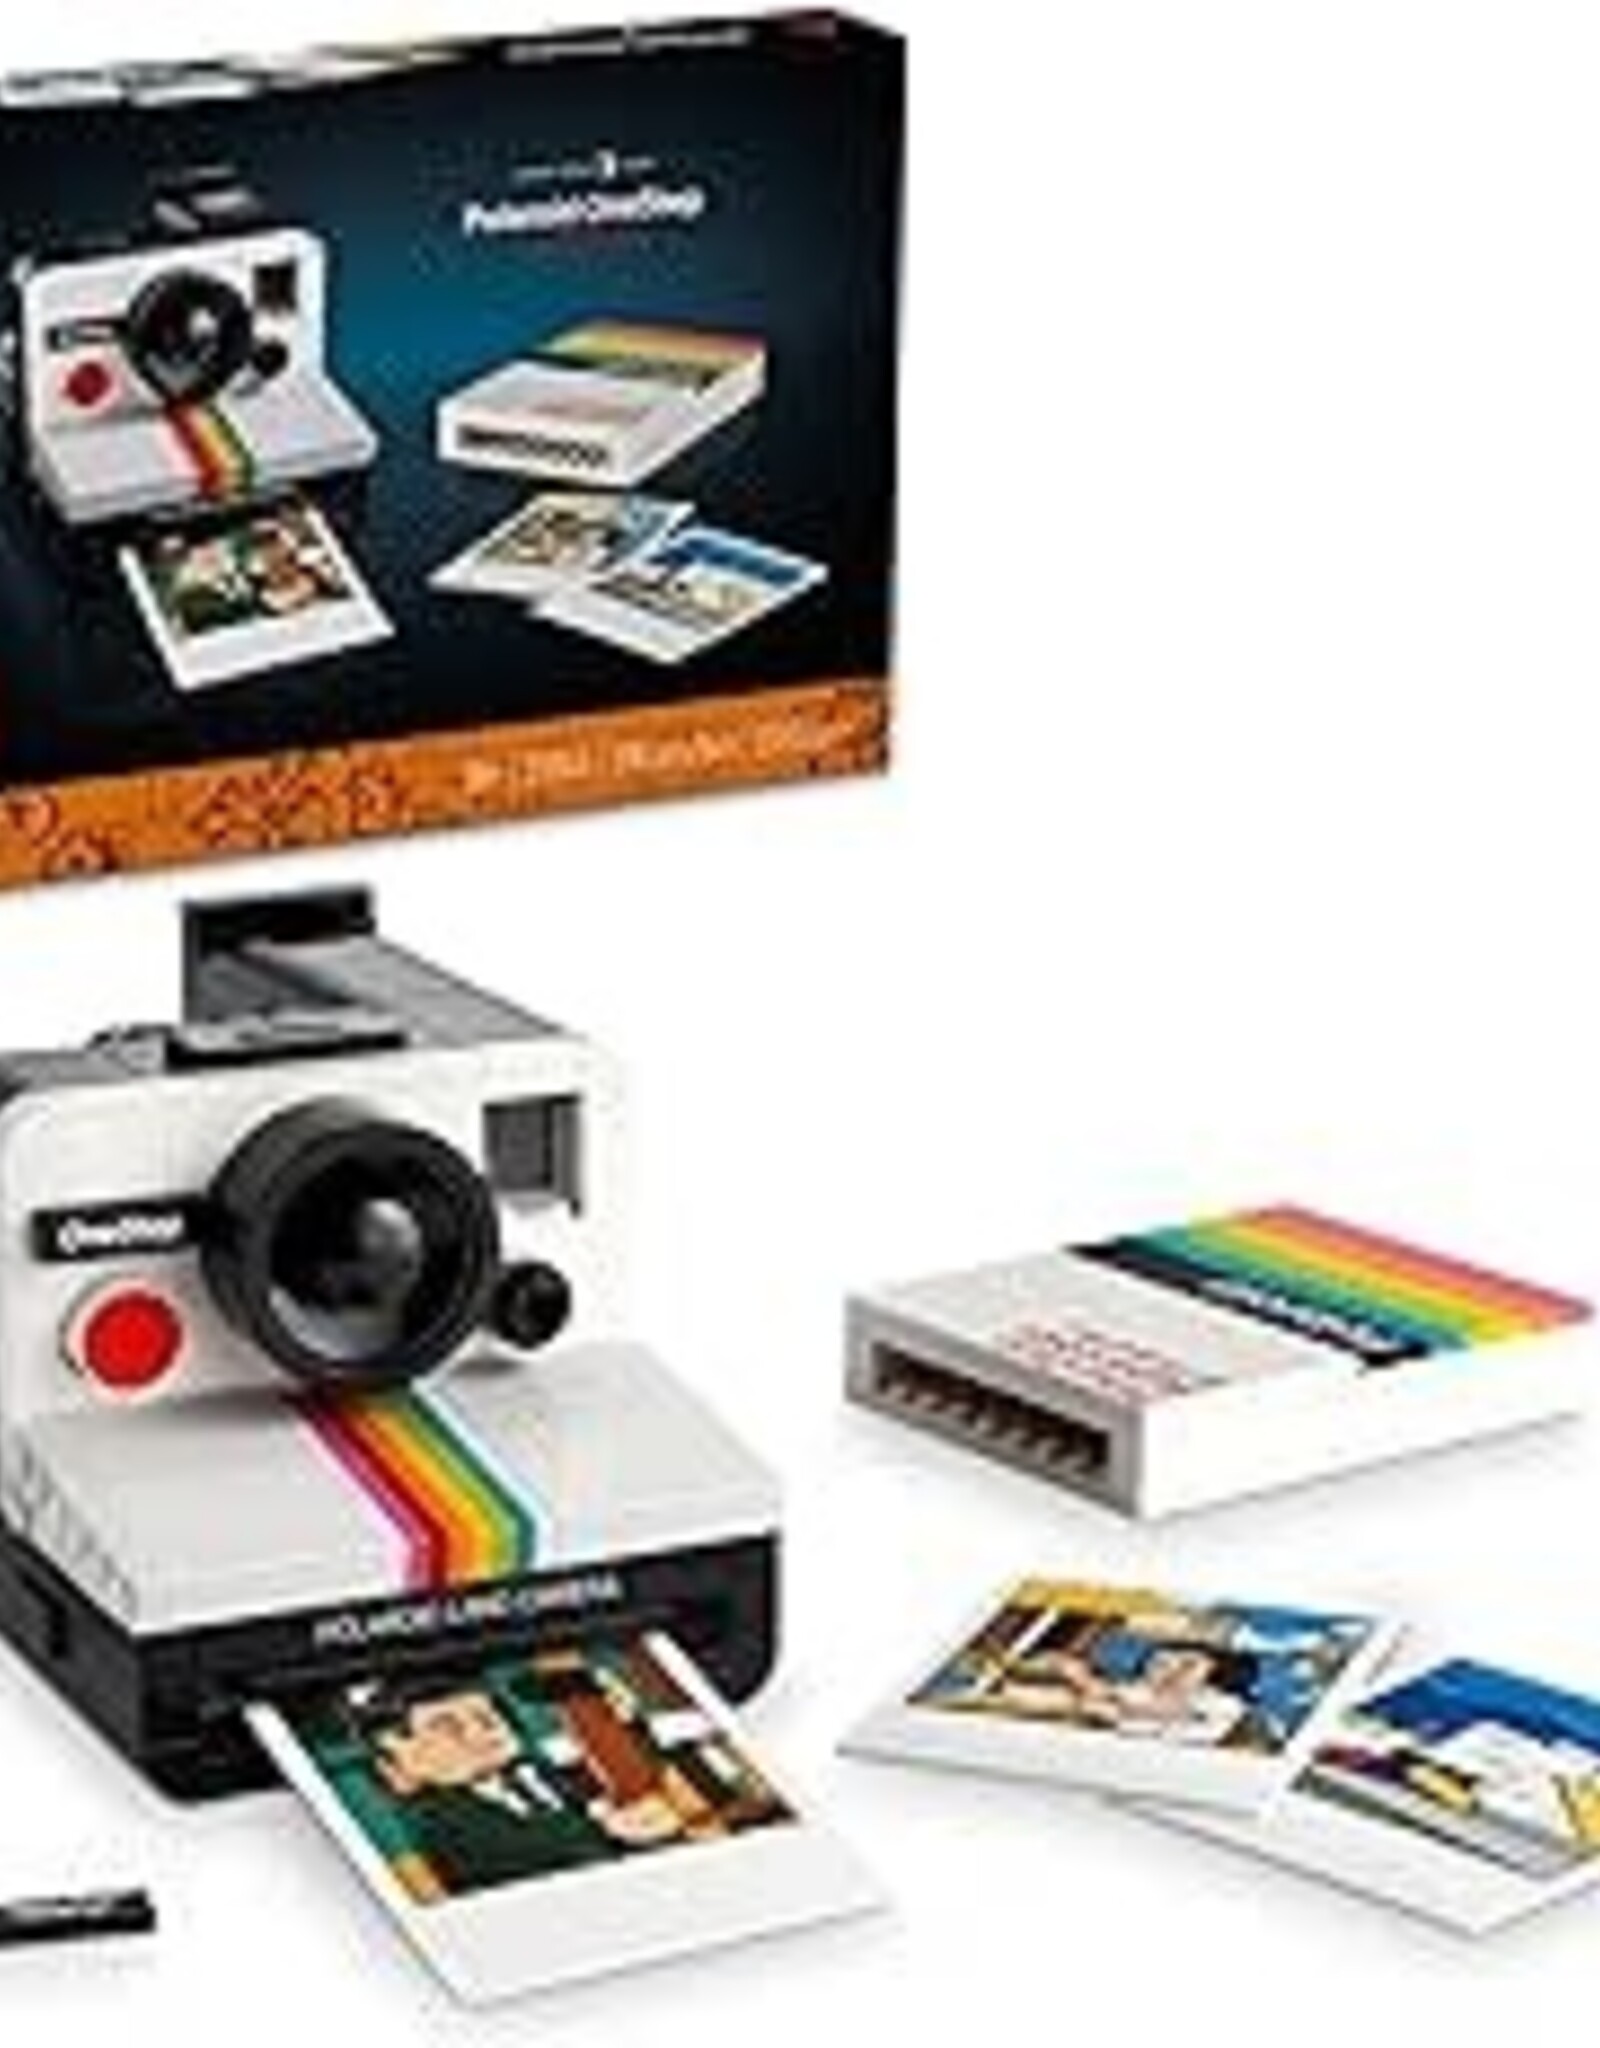 LEGO LEGO Ideas Polaroid OneStep SX-70 Camera